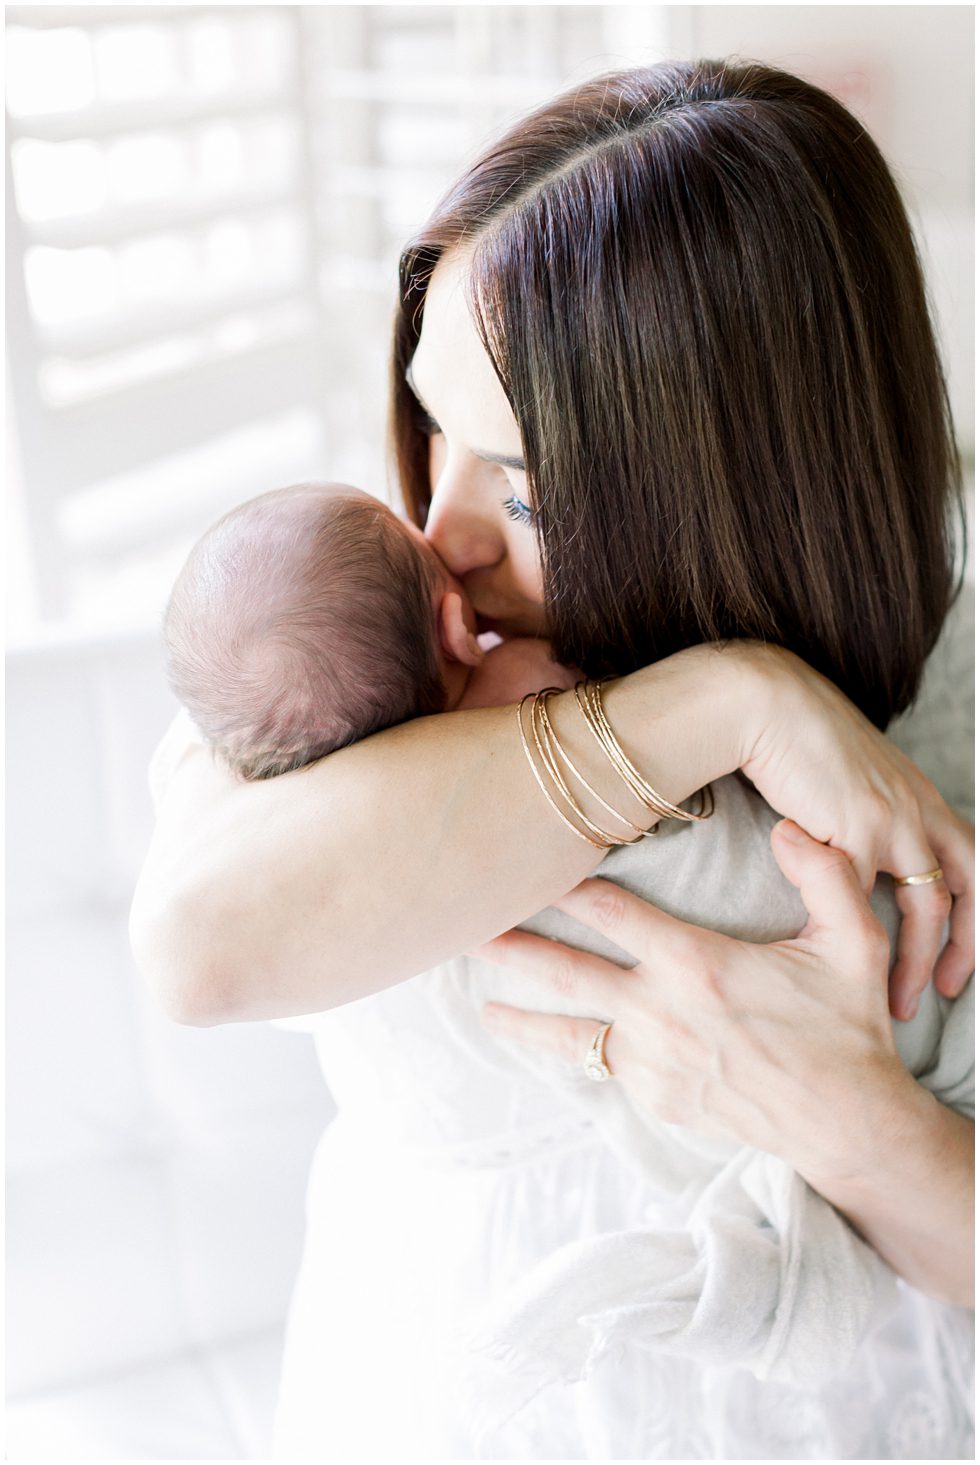 A woman kissing an infant